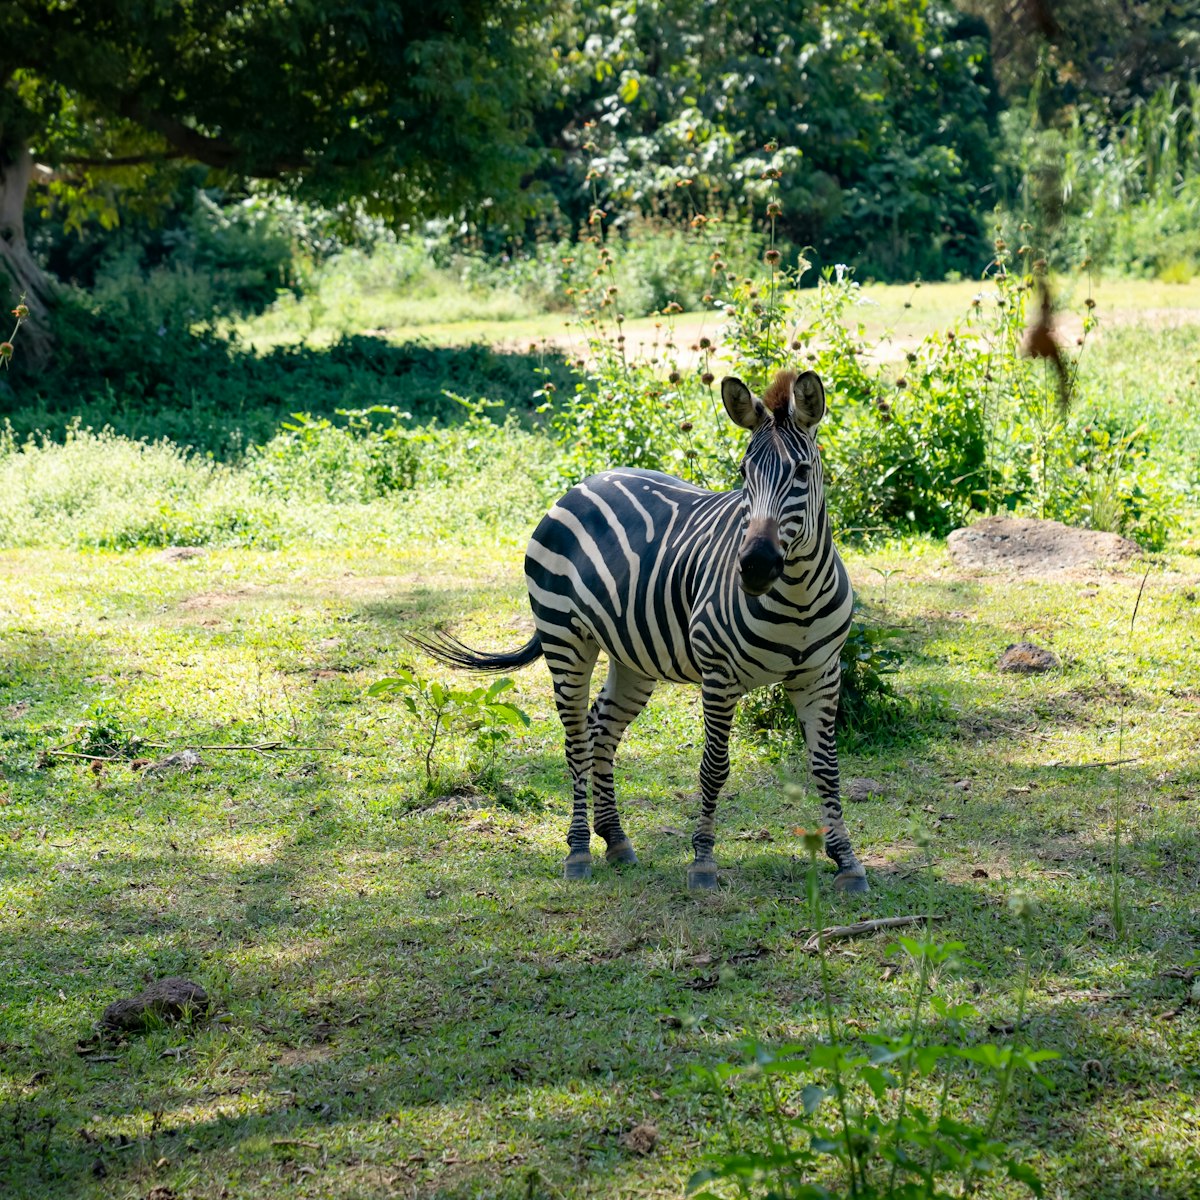 A zebra at the Uganda Wildlife Conservation Education Center.